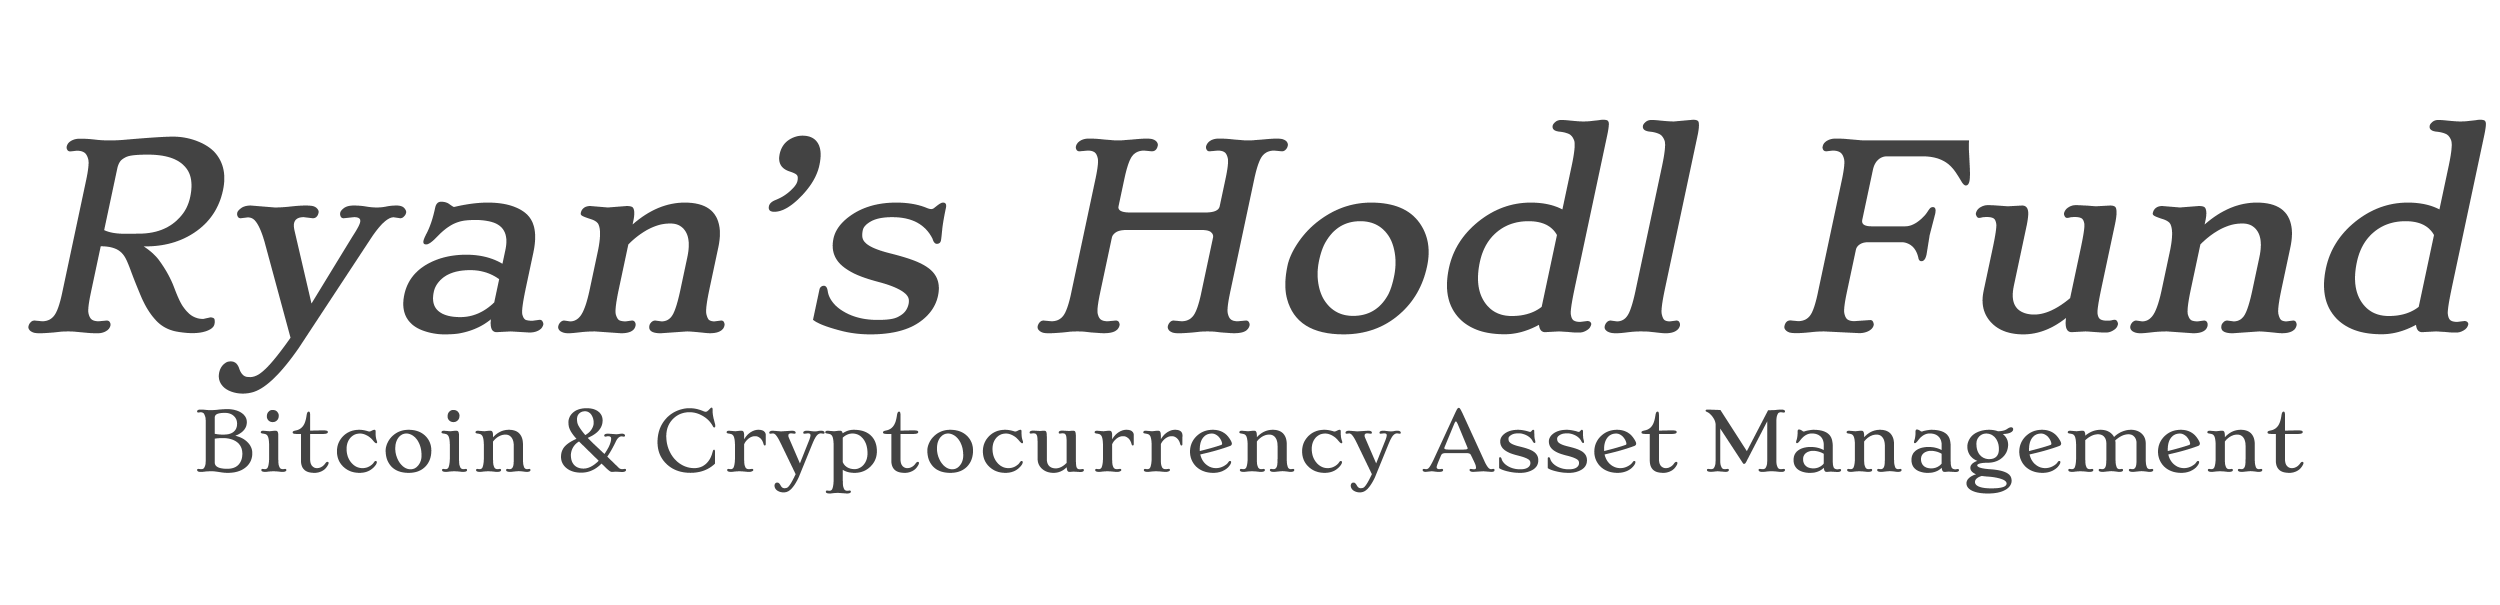 Ryan's Logo - logo - Ryan's Hodl Fund